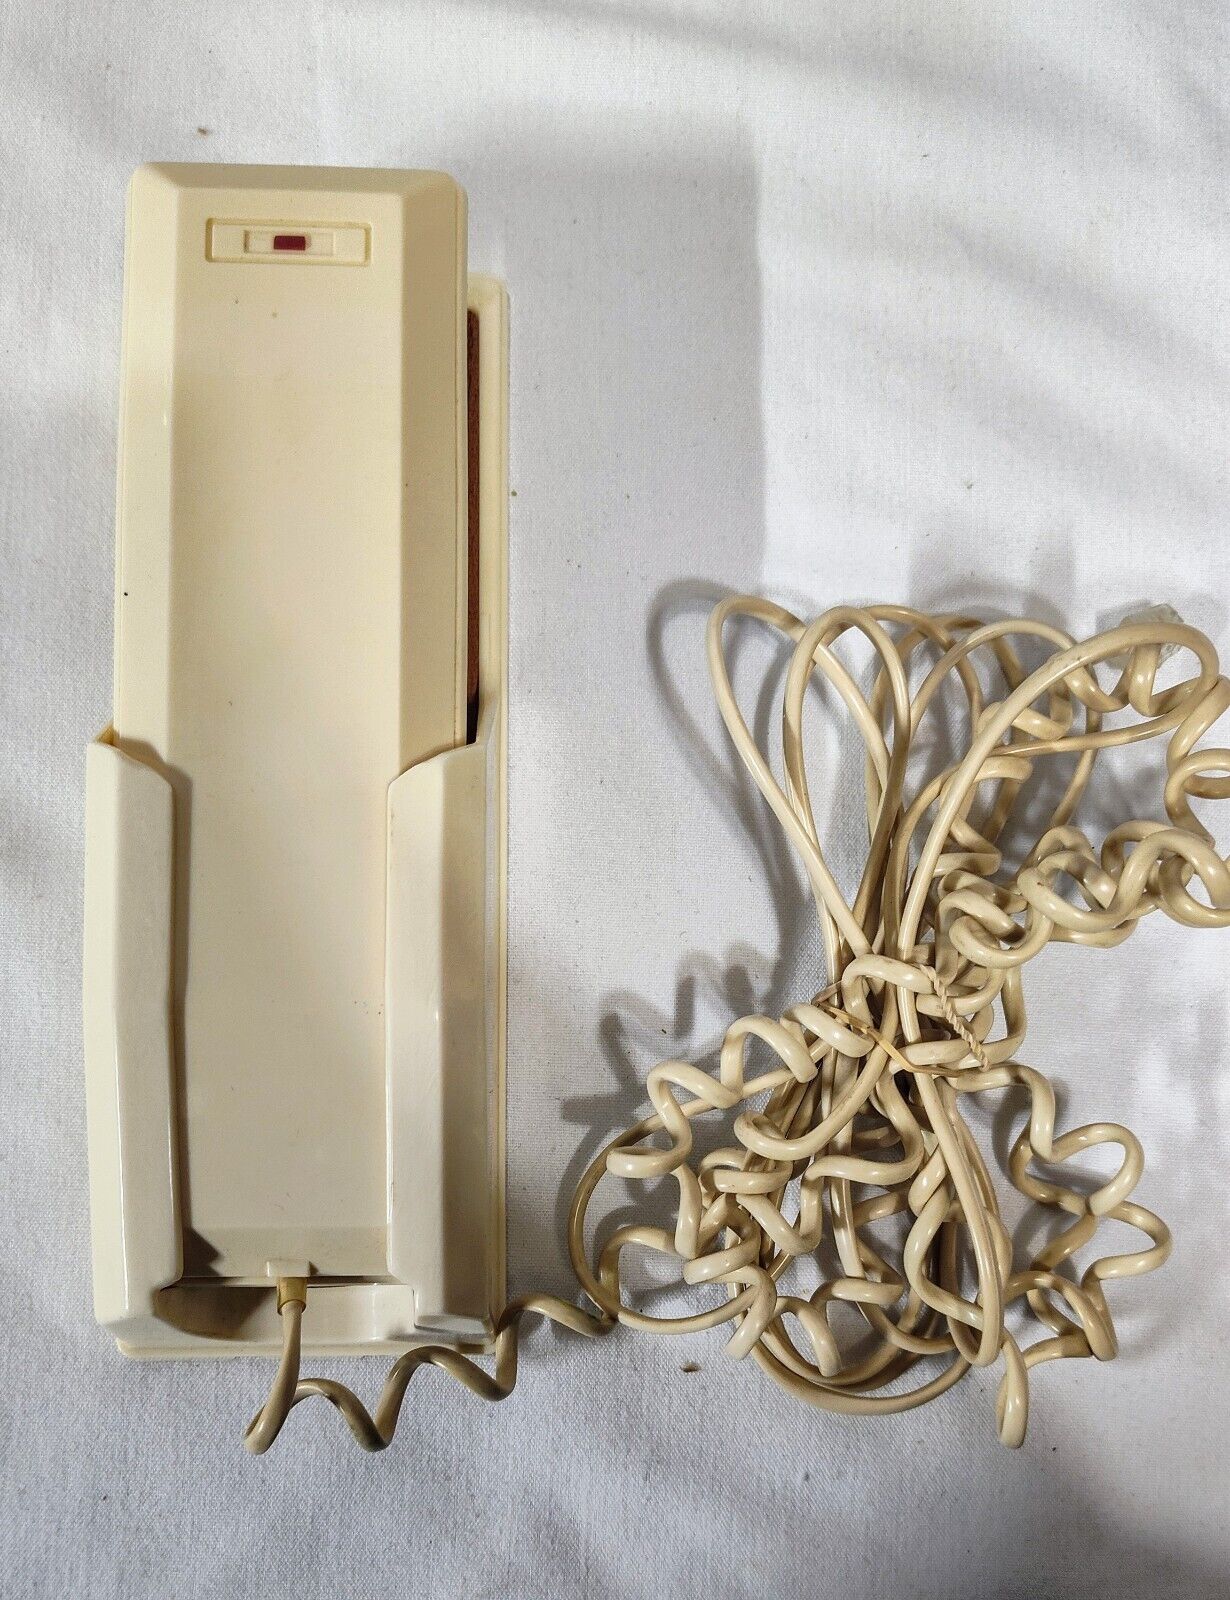 Vintage Webcor Zip Model 787 Wall Telephone Phone White - Works 1980s Japan